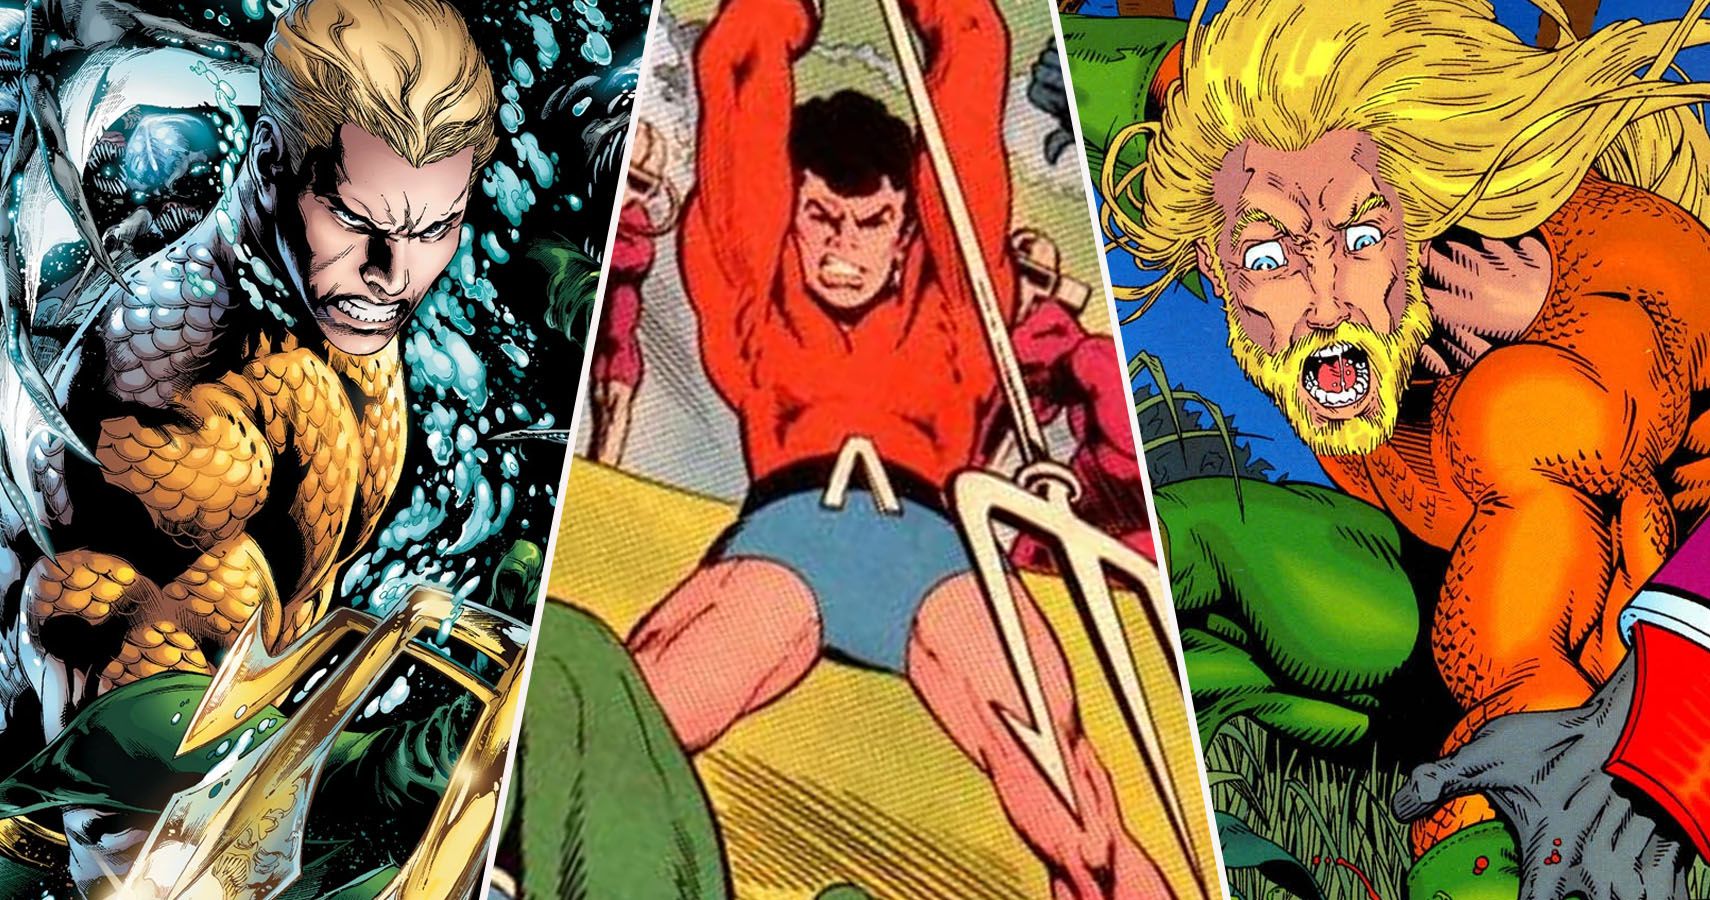 3 way split of New 52 Aquaman, Aqualad about to impale Aquaman, and Aquaman about to lose his hand